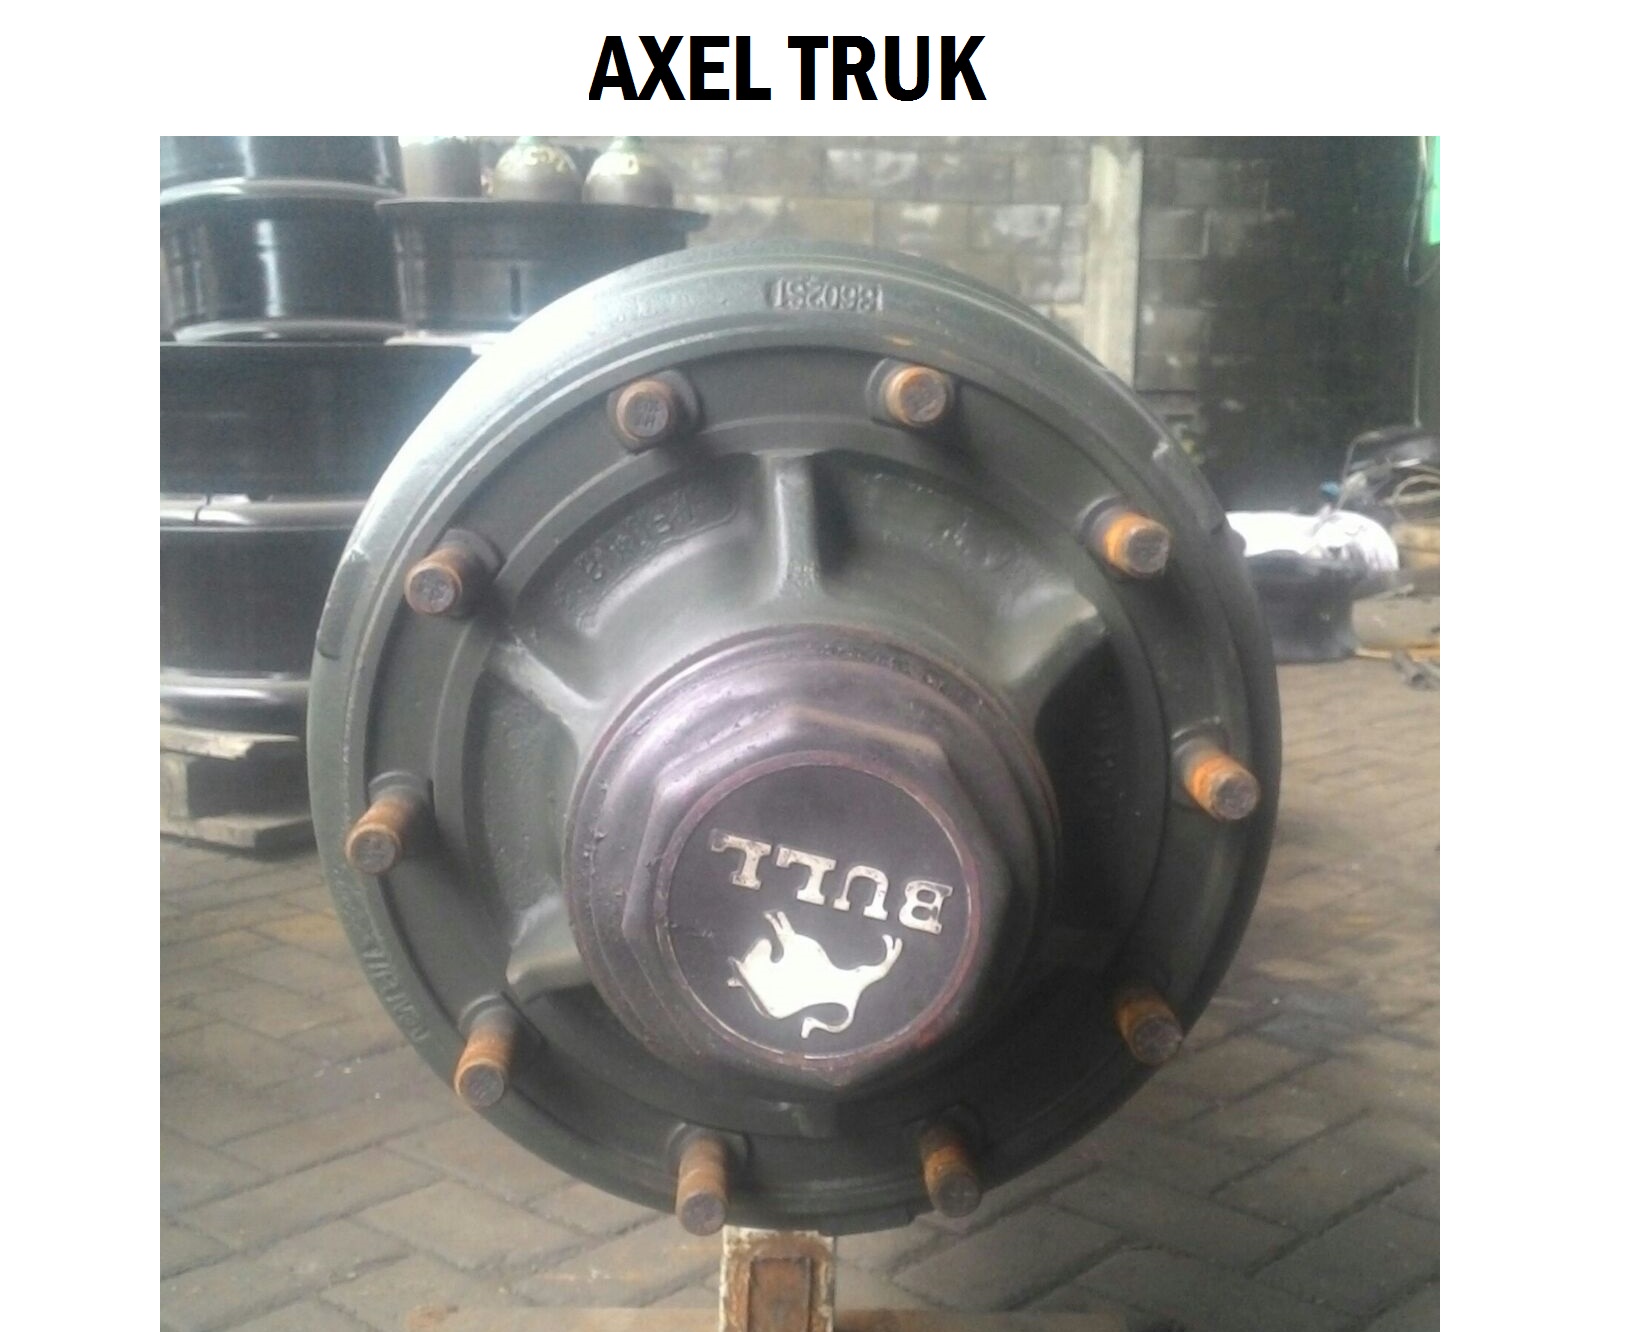 Axel Truk